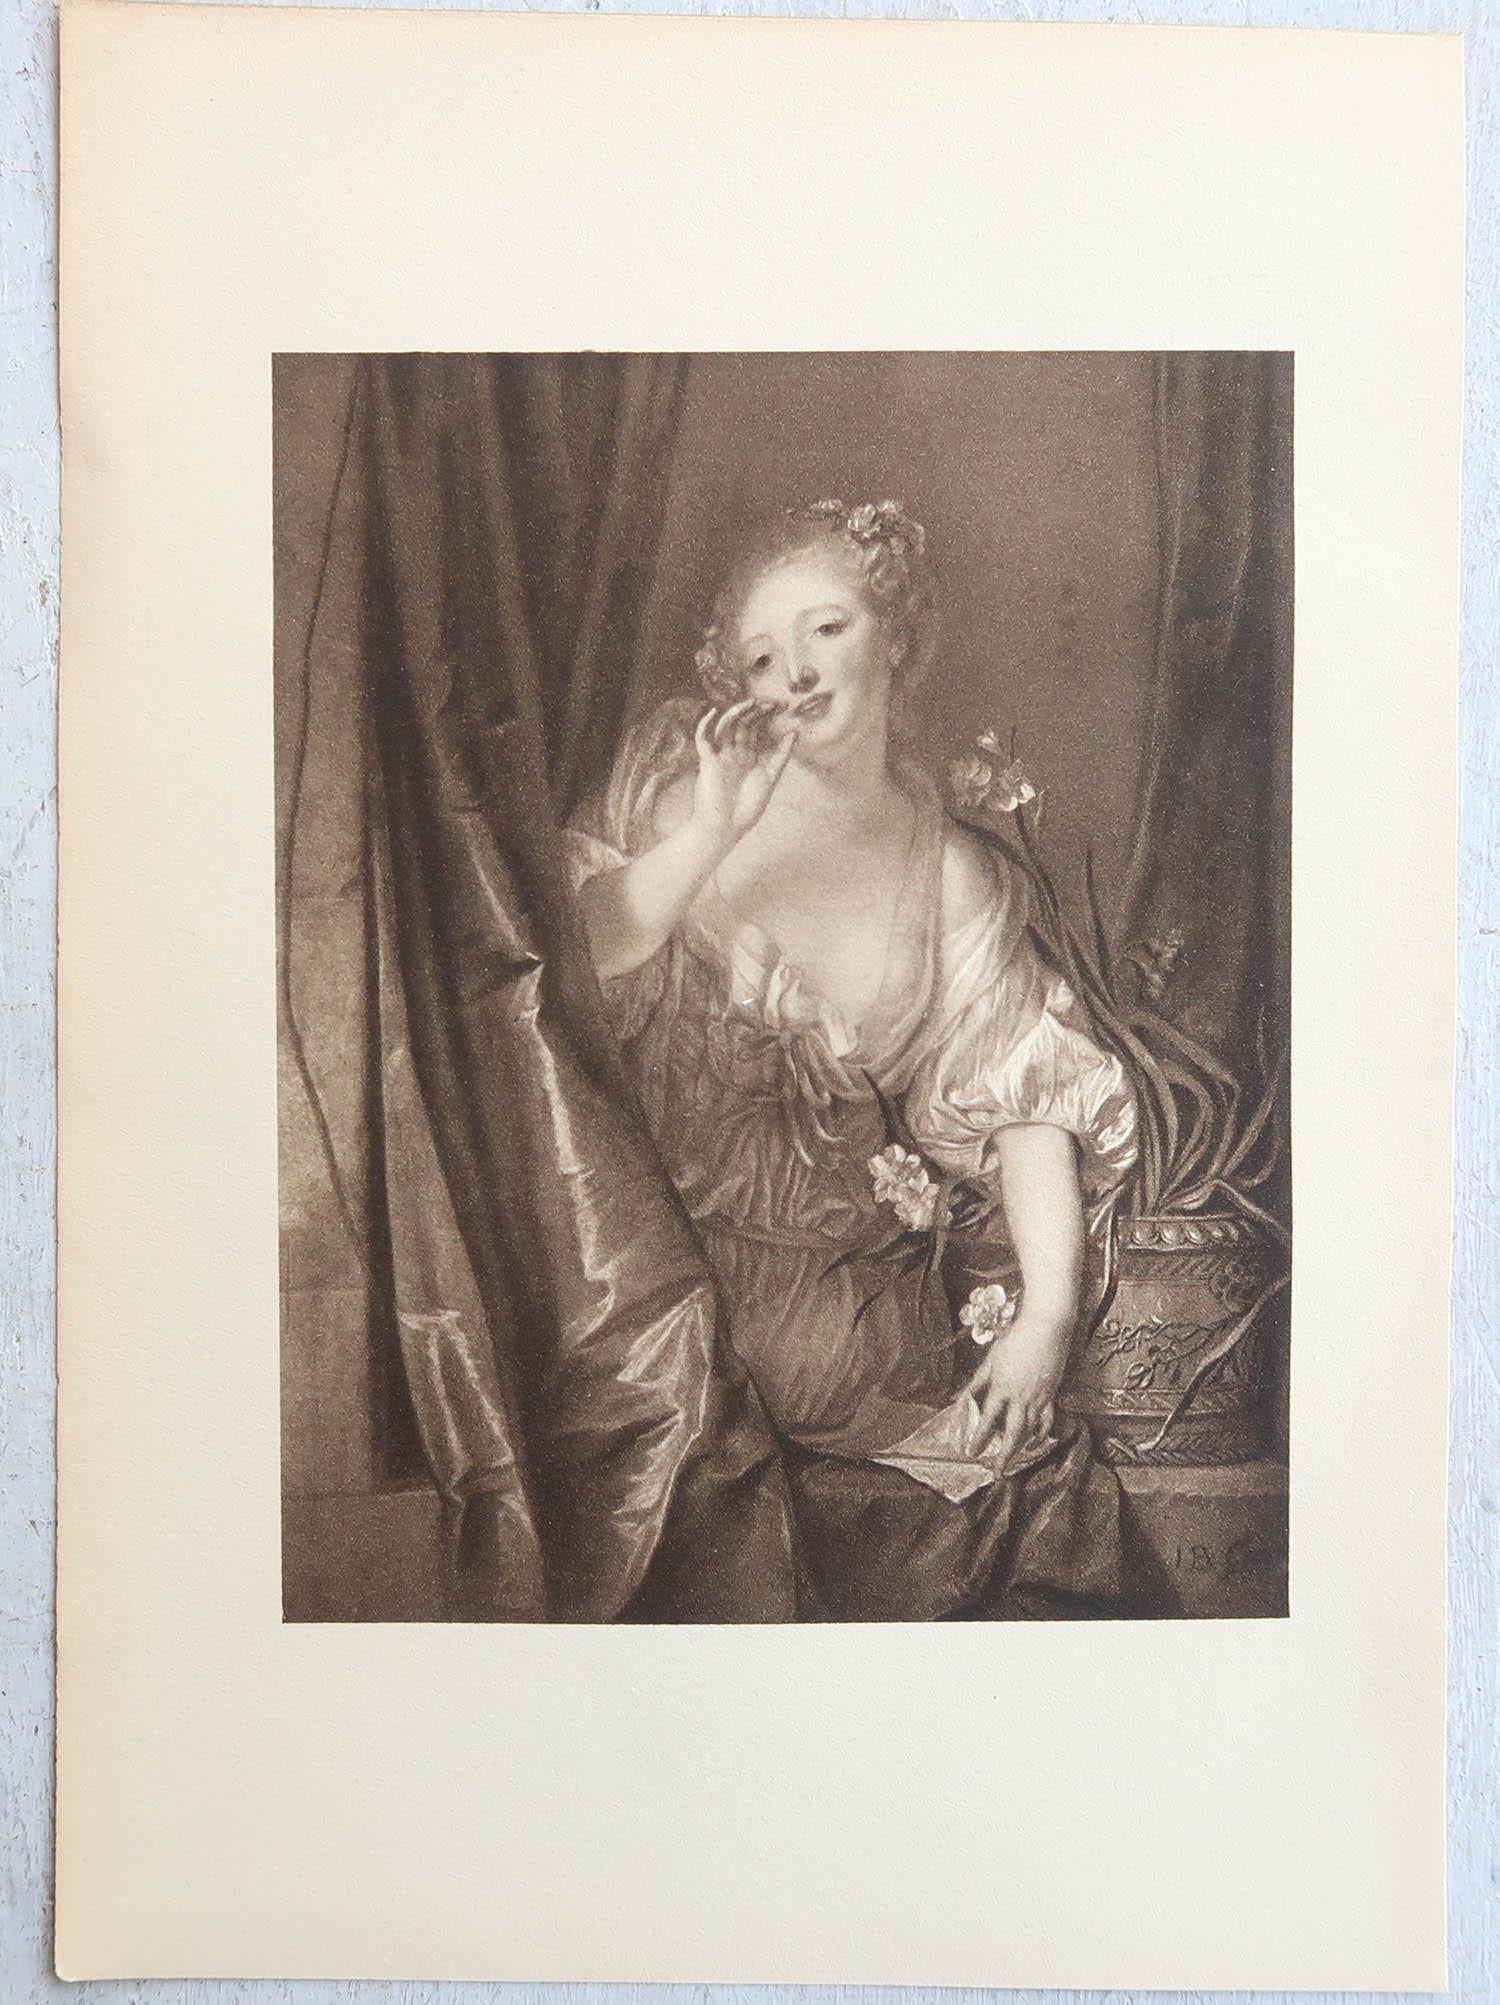 English Original Antique Print After Jean-Baptiste Greuze. 1912